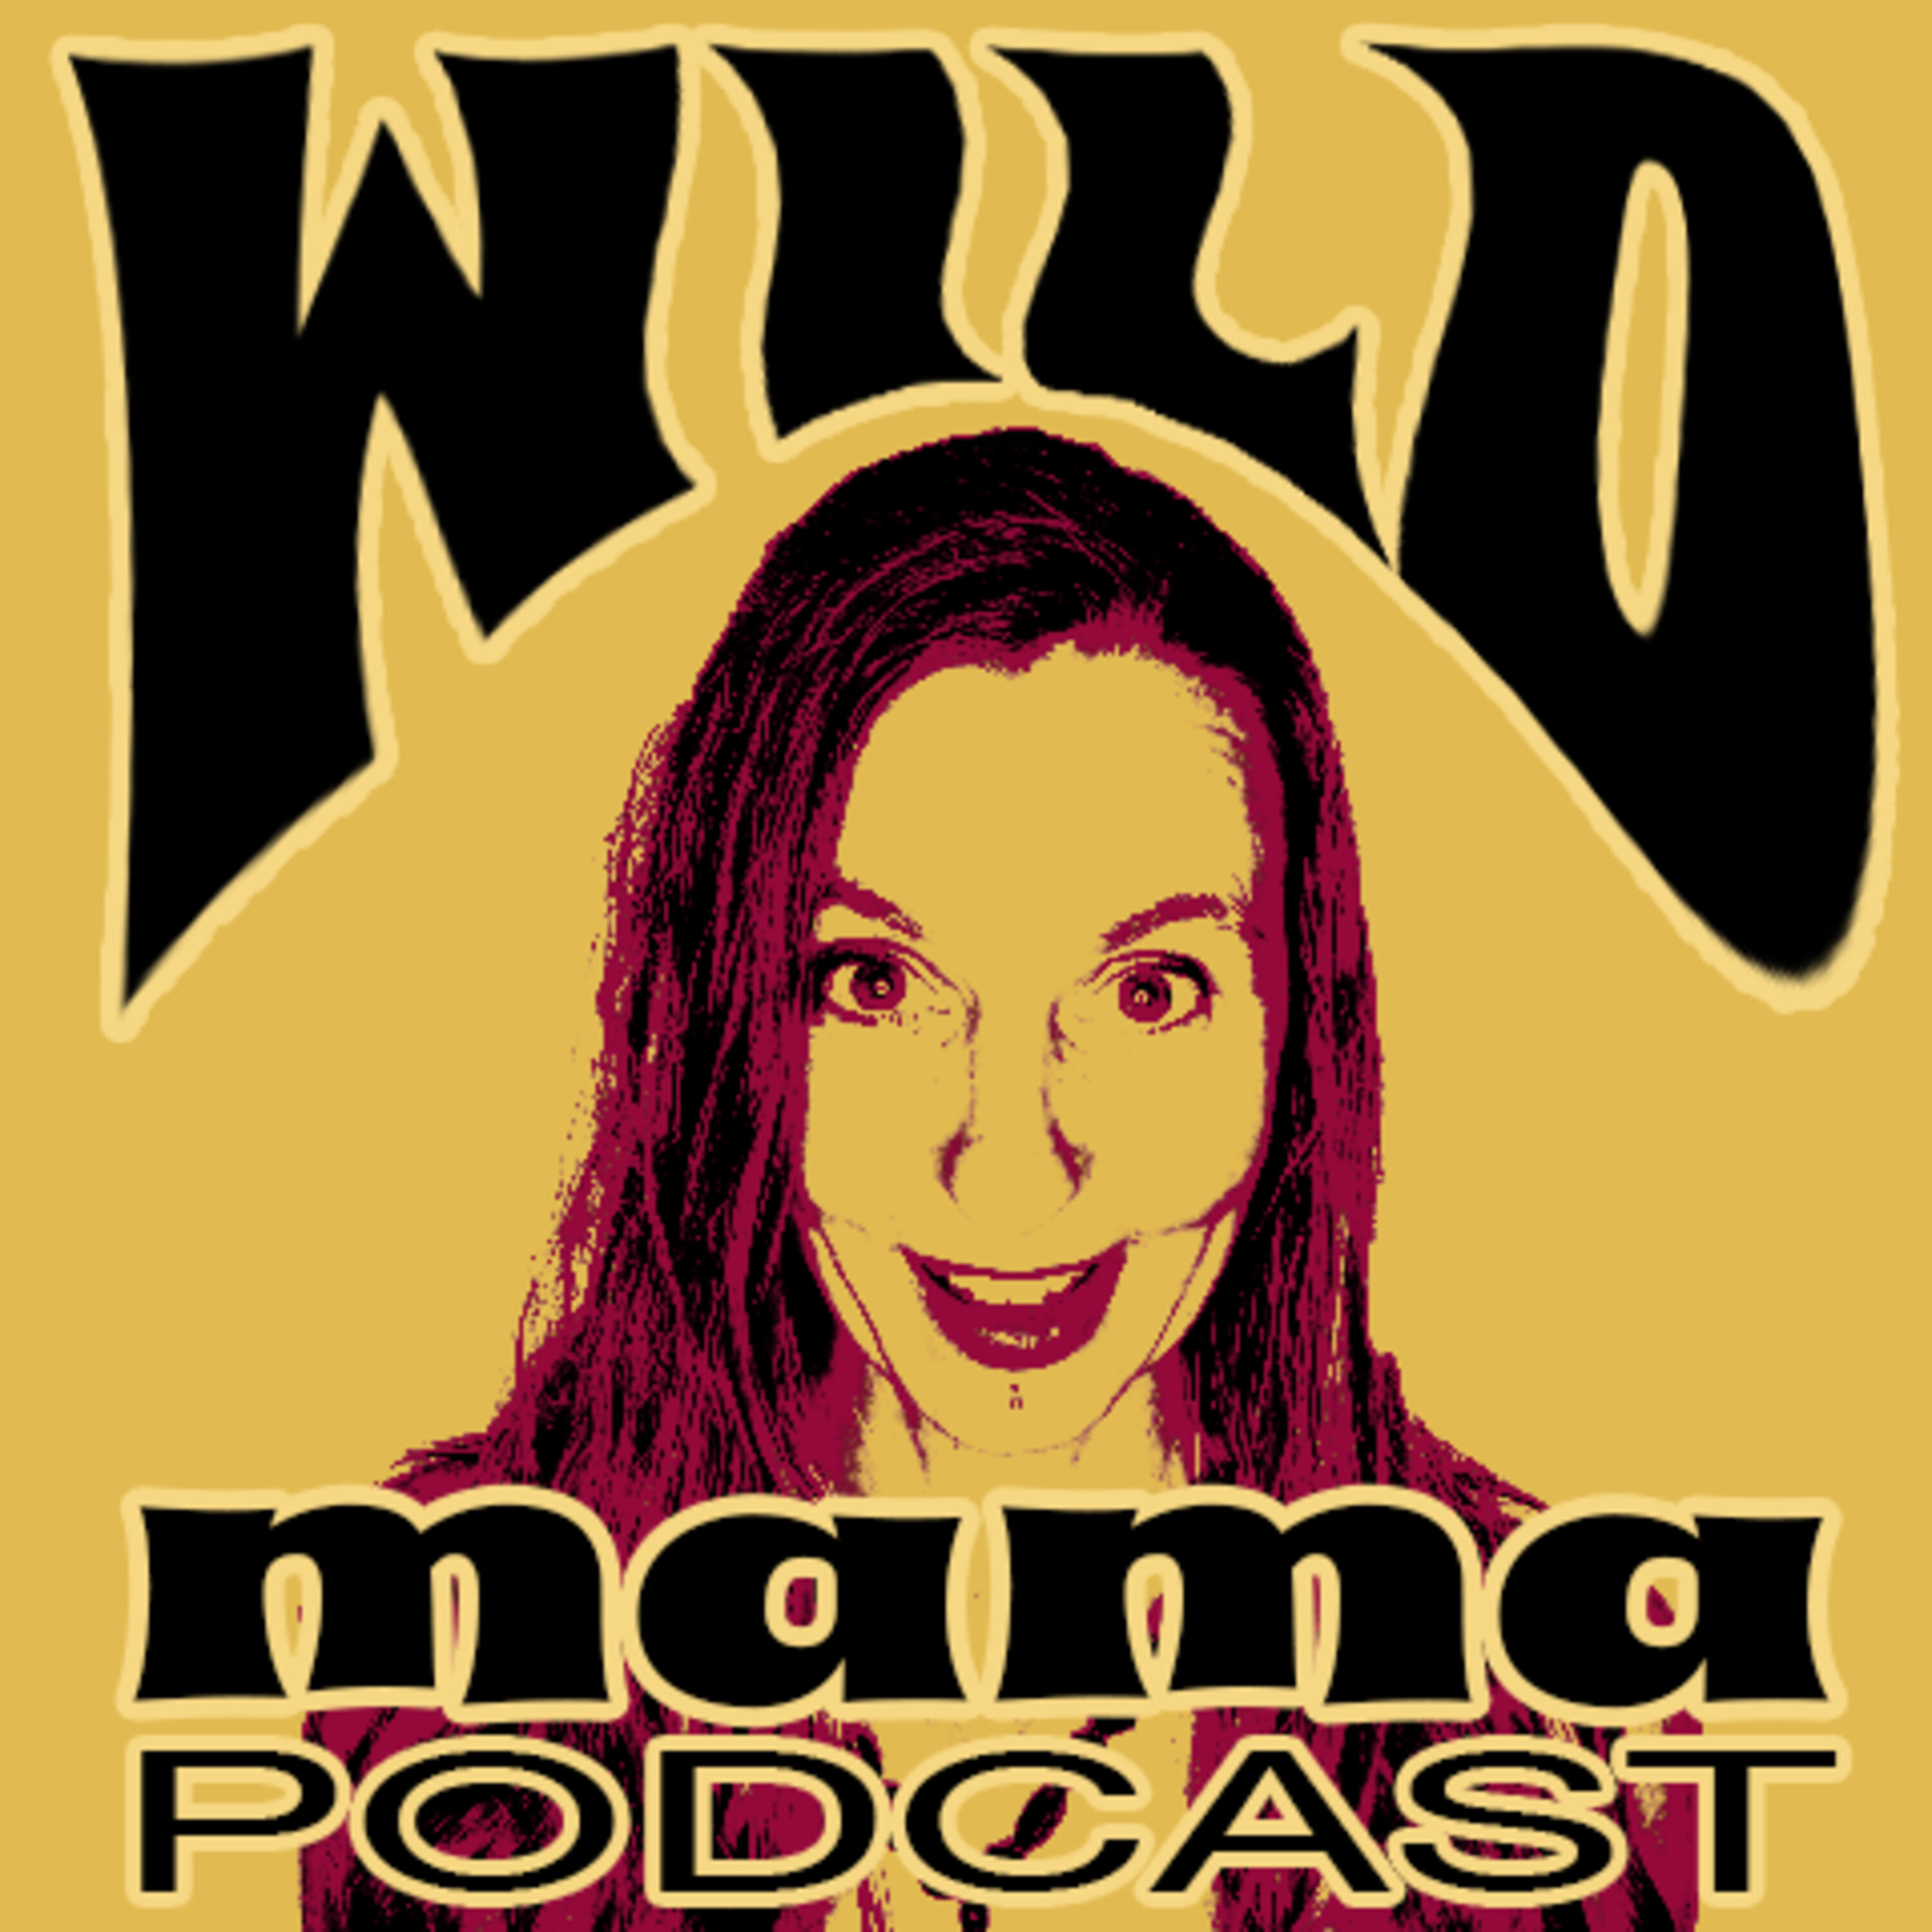 WILD mama Podcast podcast show image